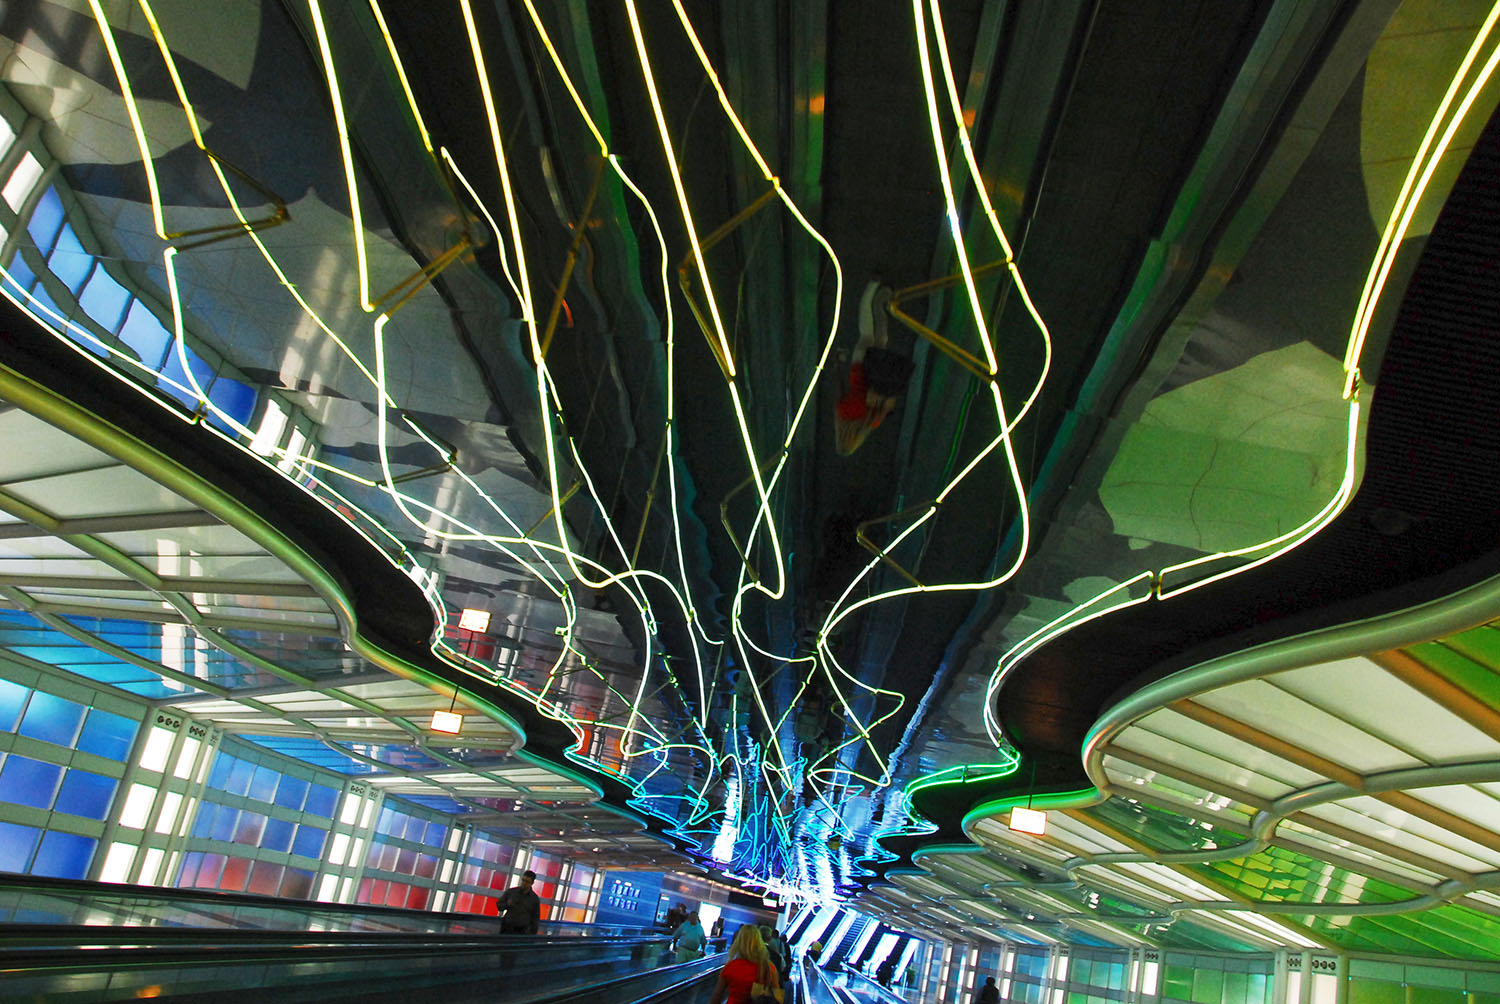 Architecture_Ohare_Airport_Subterranean_Walkway_Skies_The_Limit_Neon_Sculpture_Transportation_Chicago_Illinois.jpg